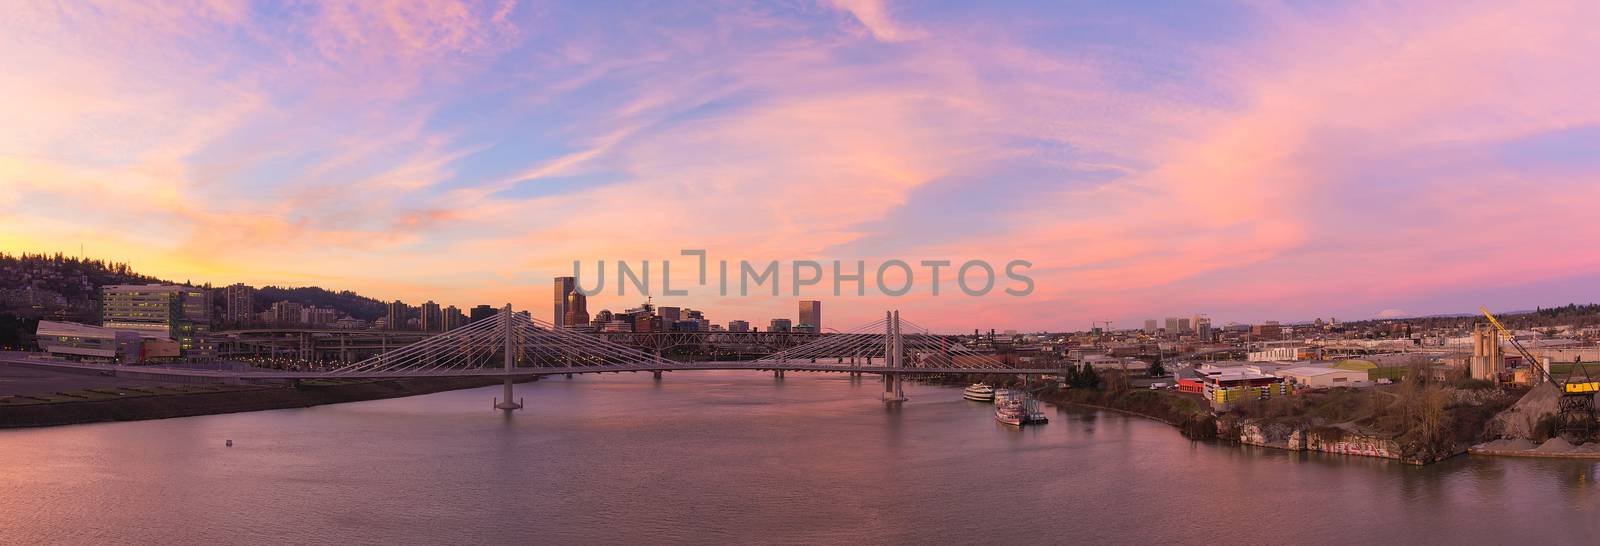 AlpenglowSunset Over Portland City Skyline by jpldesigns